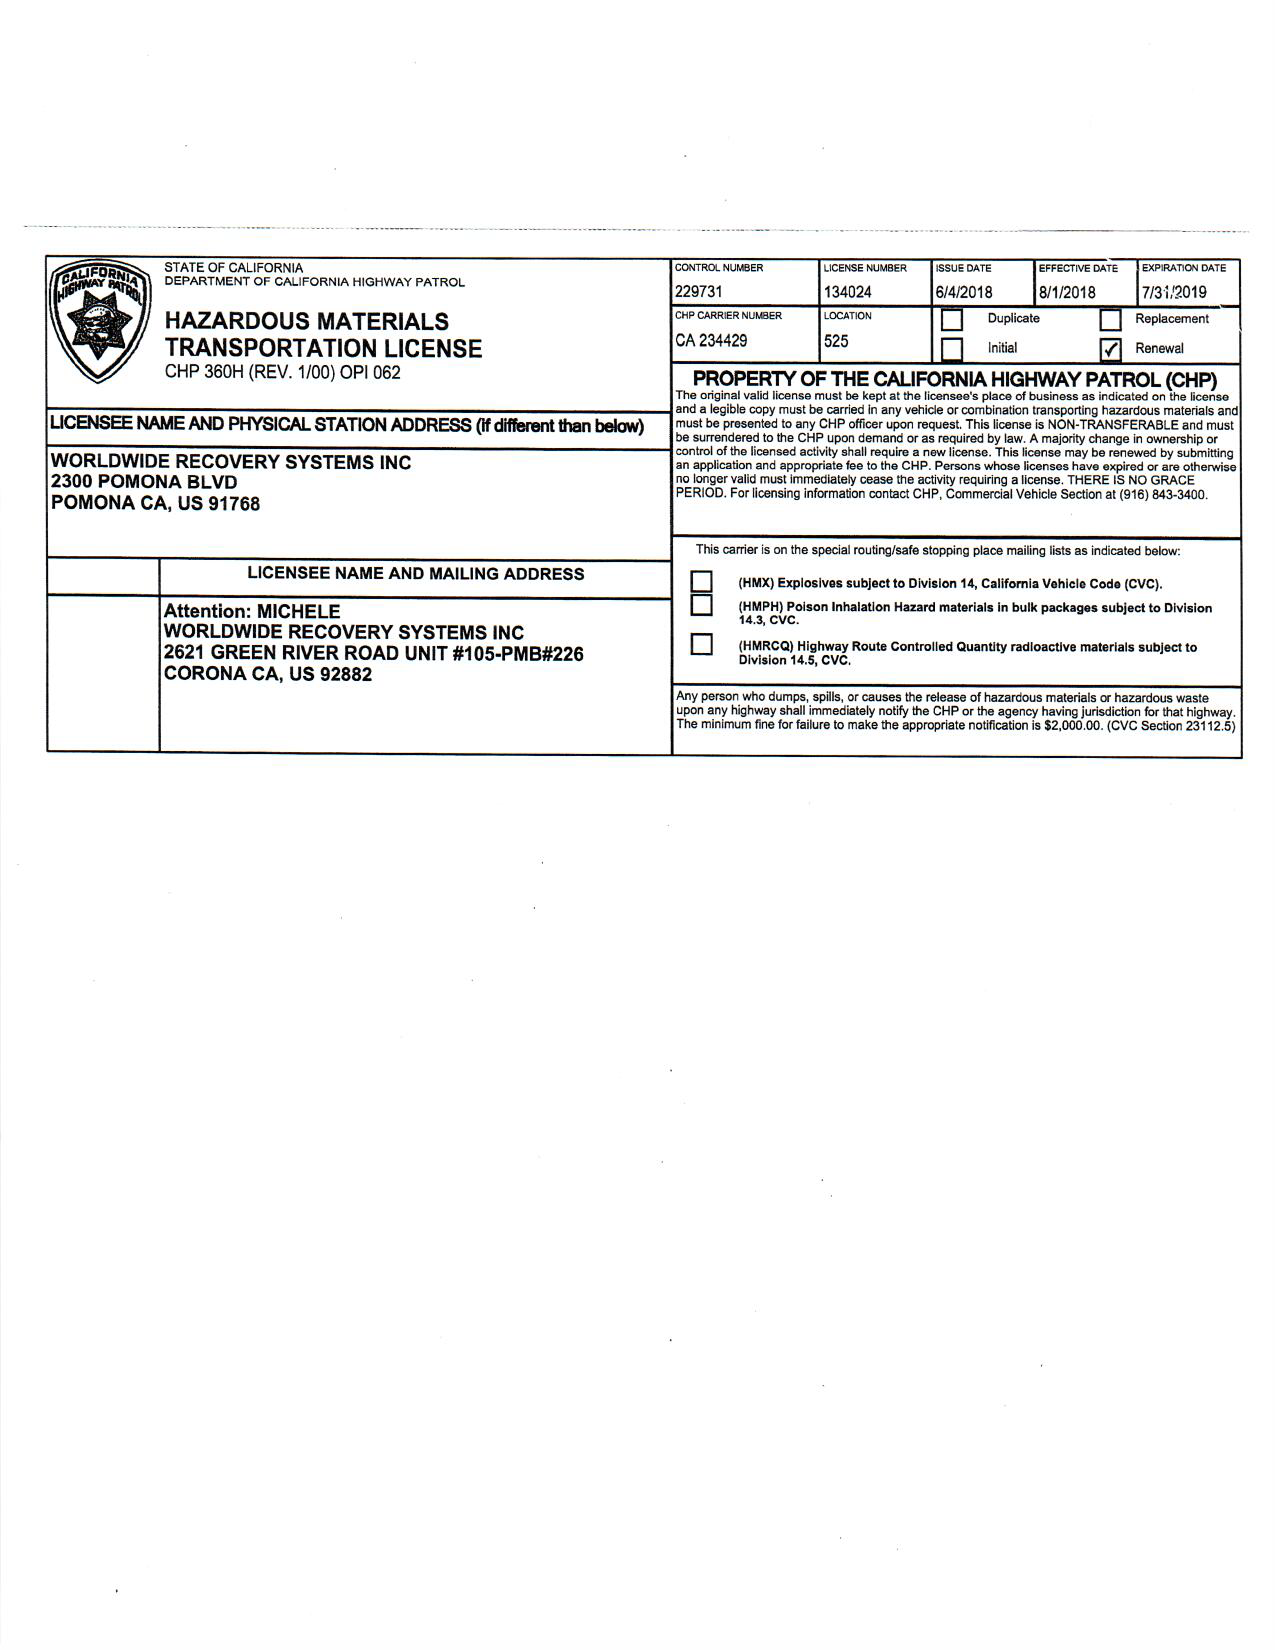 CHP Hazardous Metals Transportation License